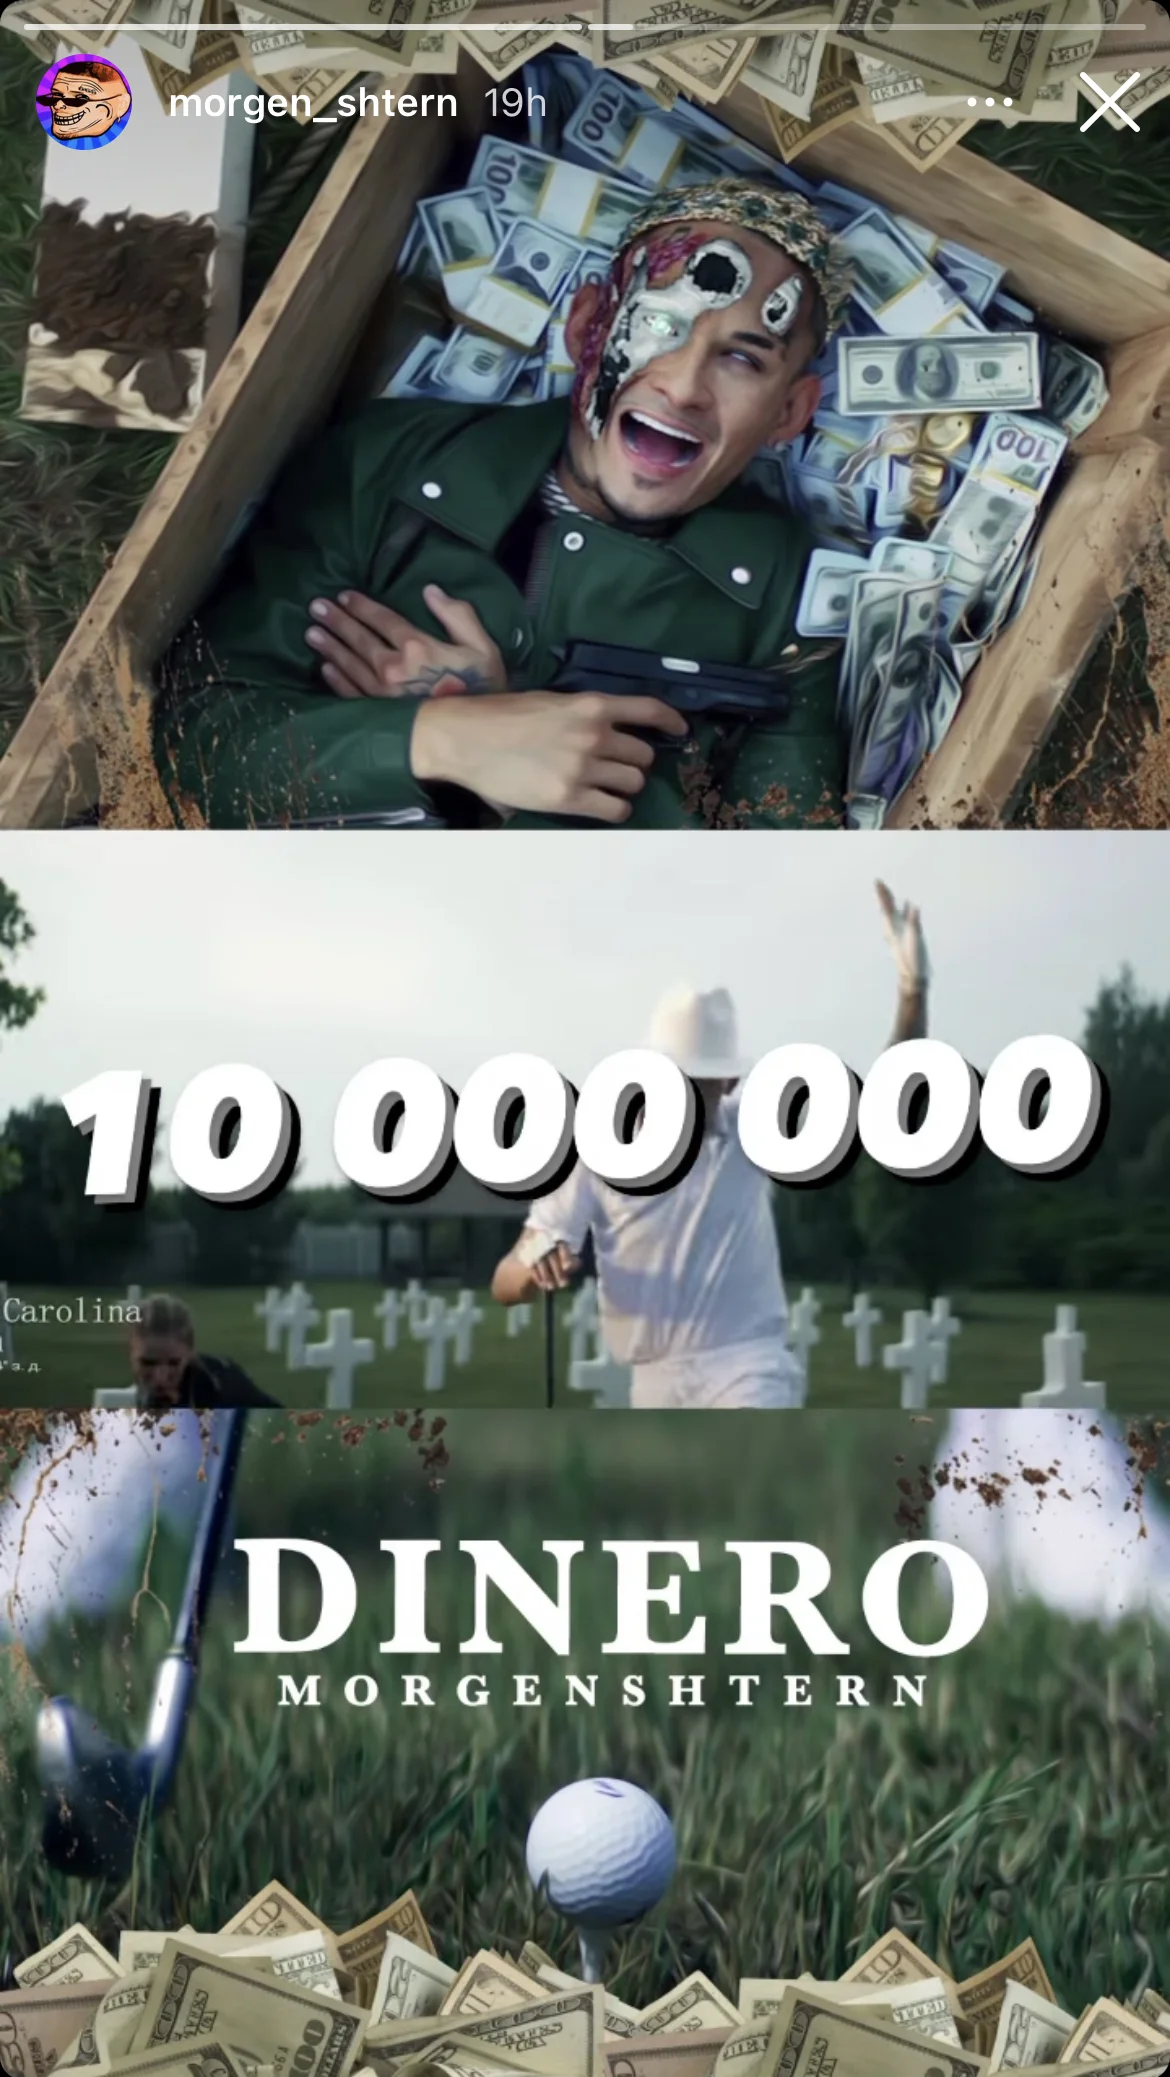 Последний клип Моргенштерна Dinero набрал на YouTube 10 миллионов просмотров - фото 1